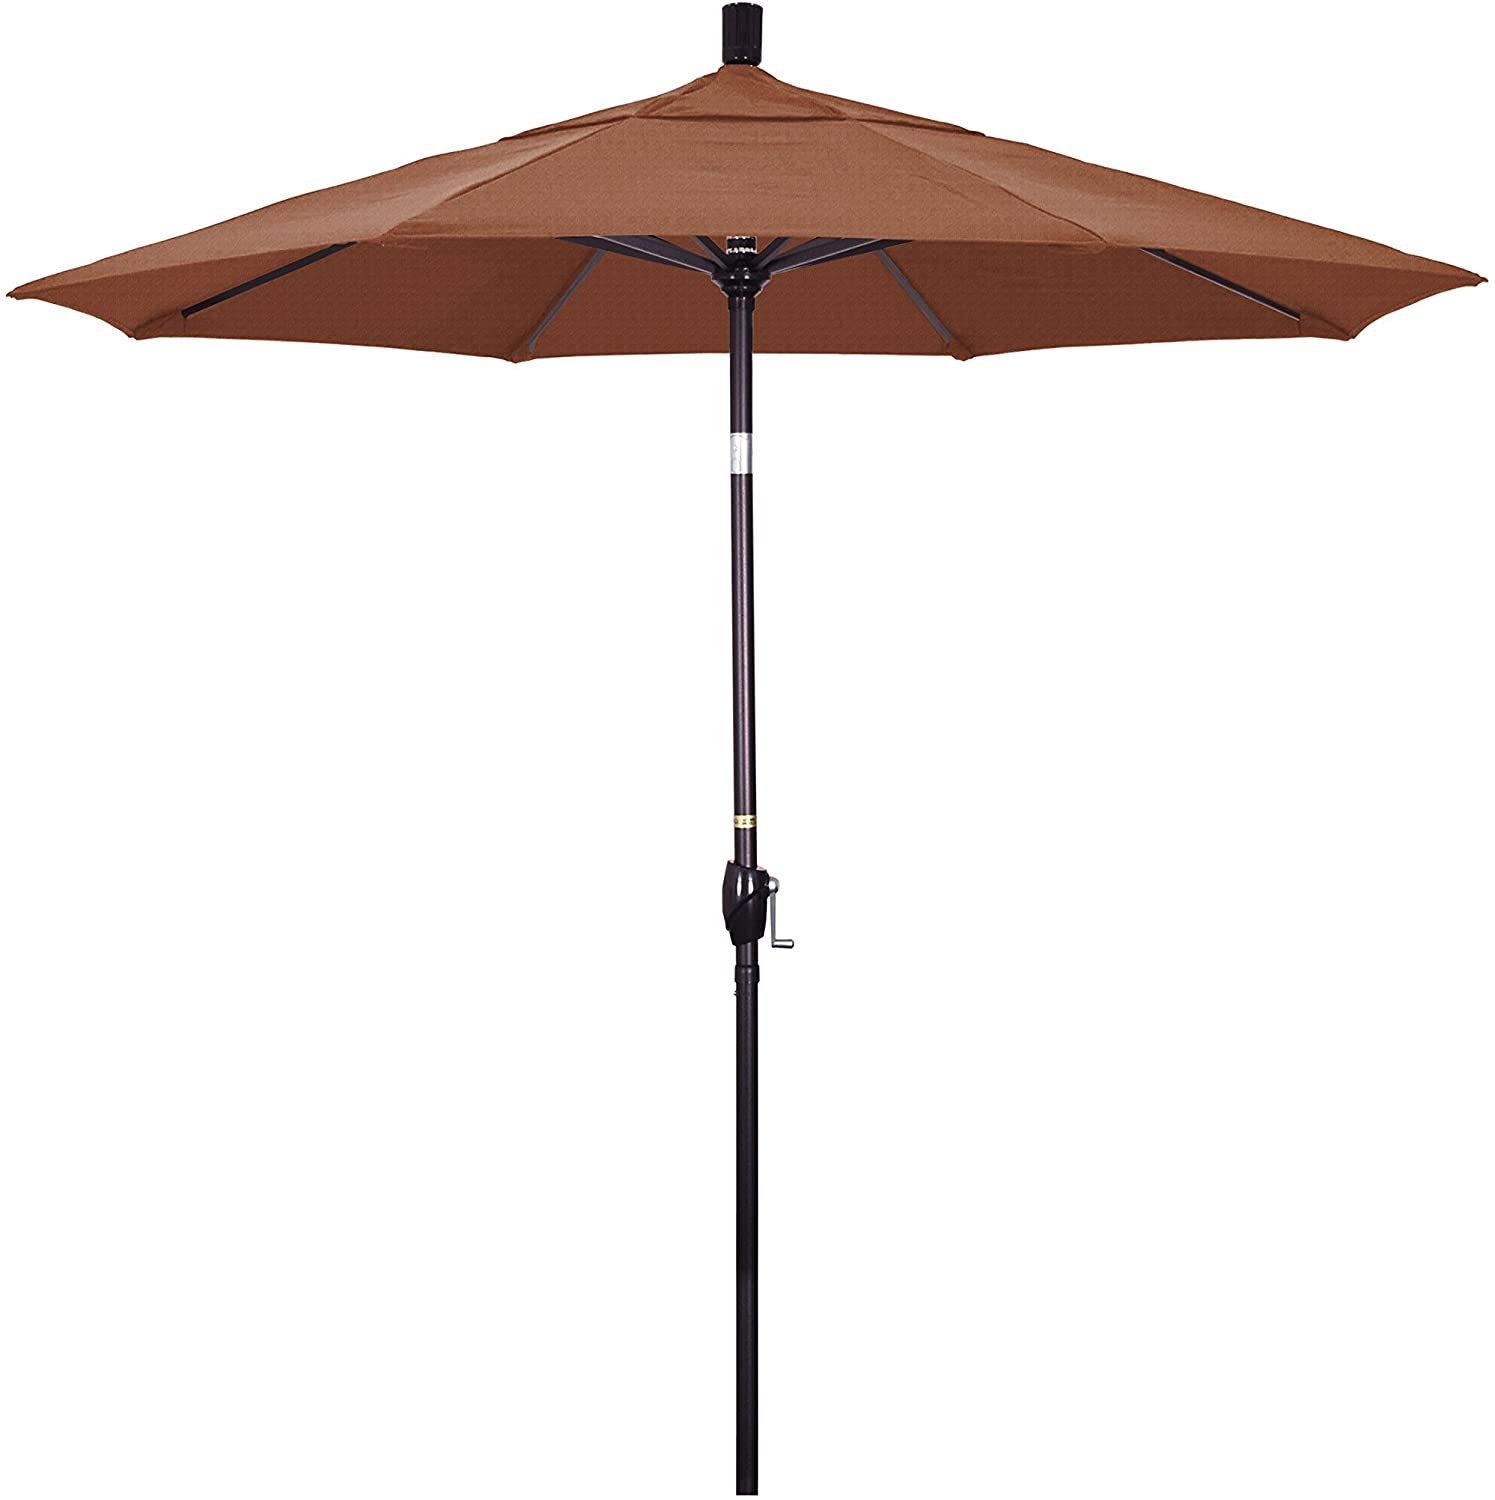 7.5 ft Market Umbrella Bronze/Navy Blue